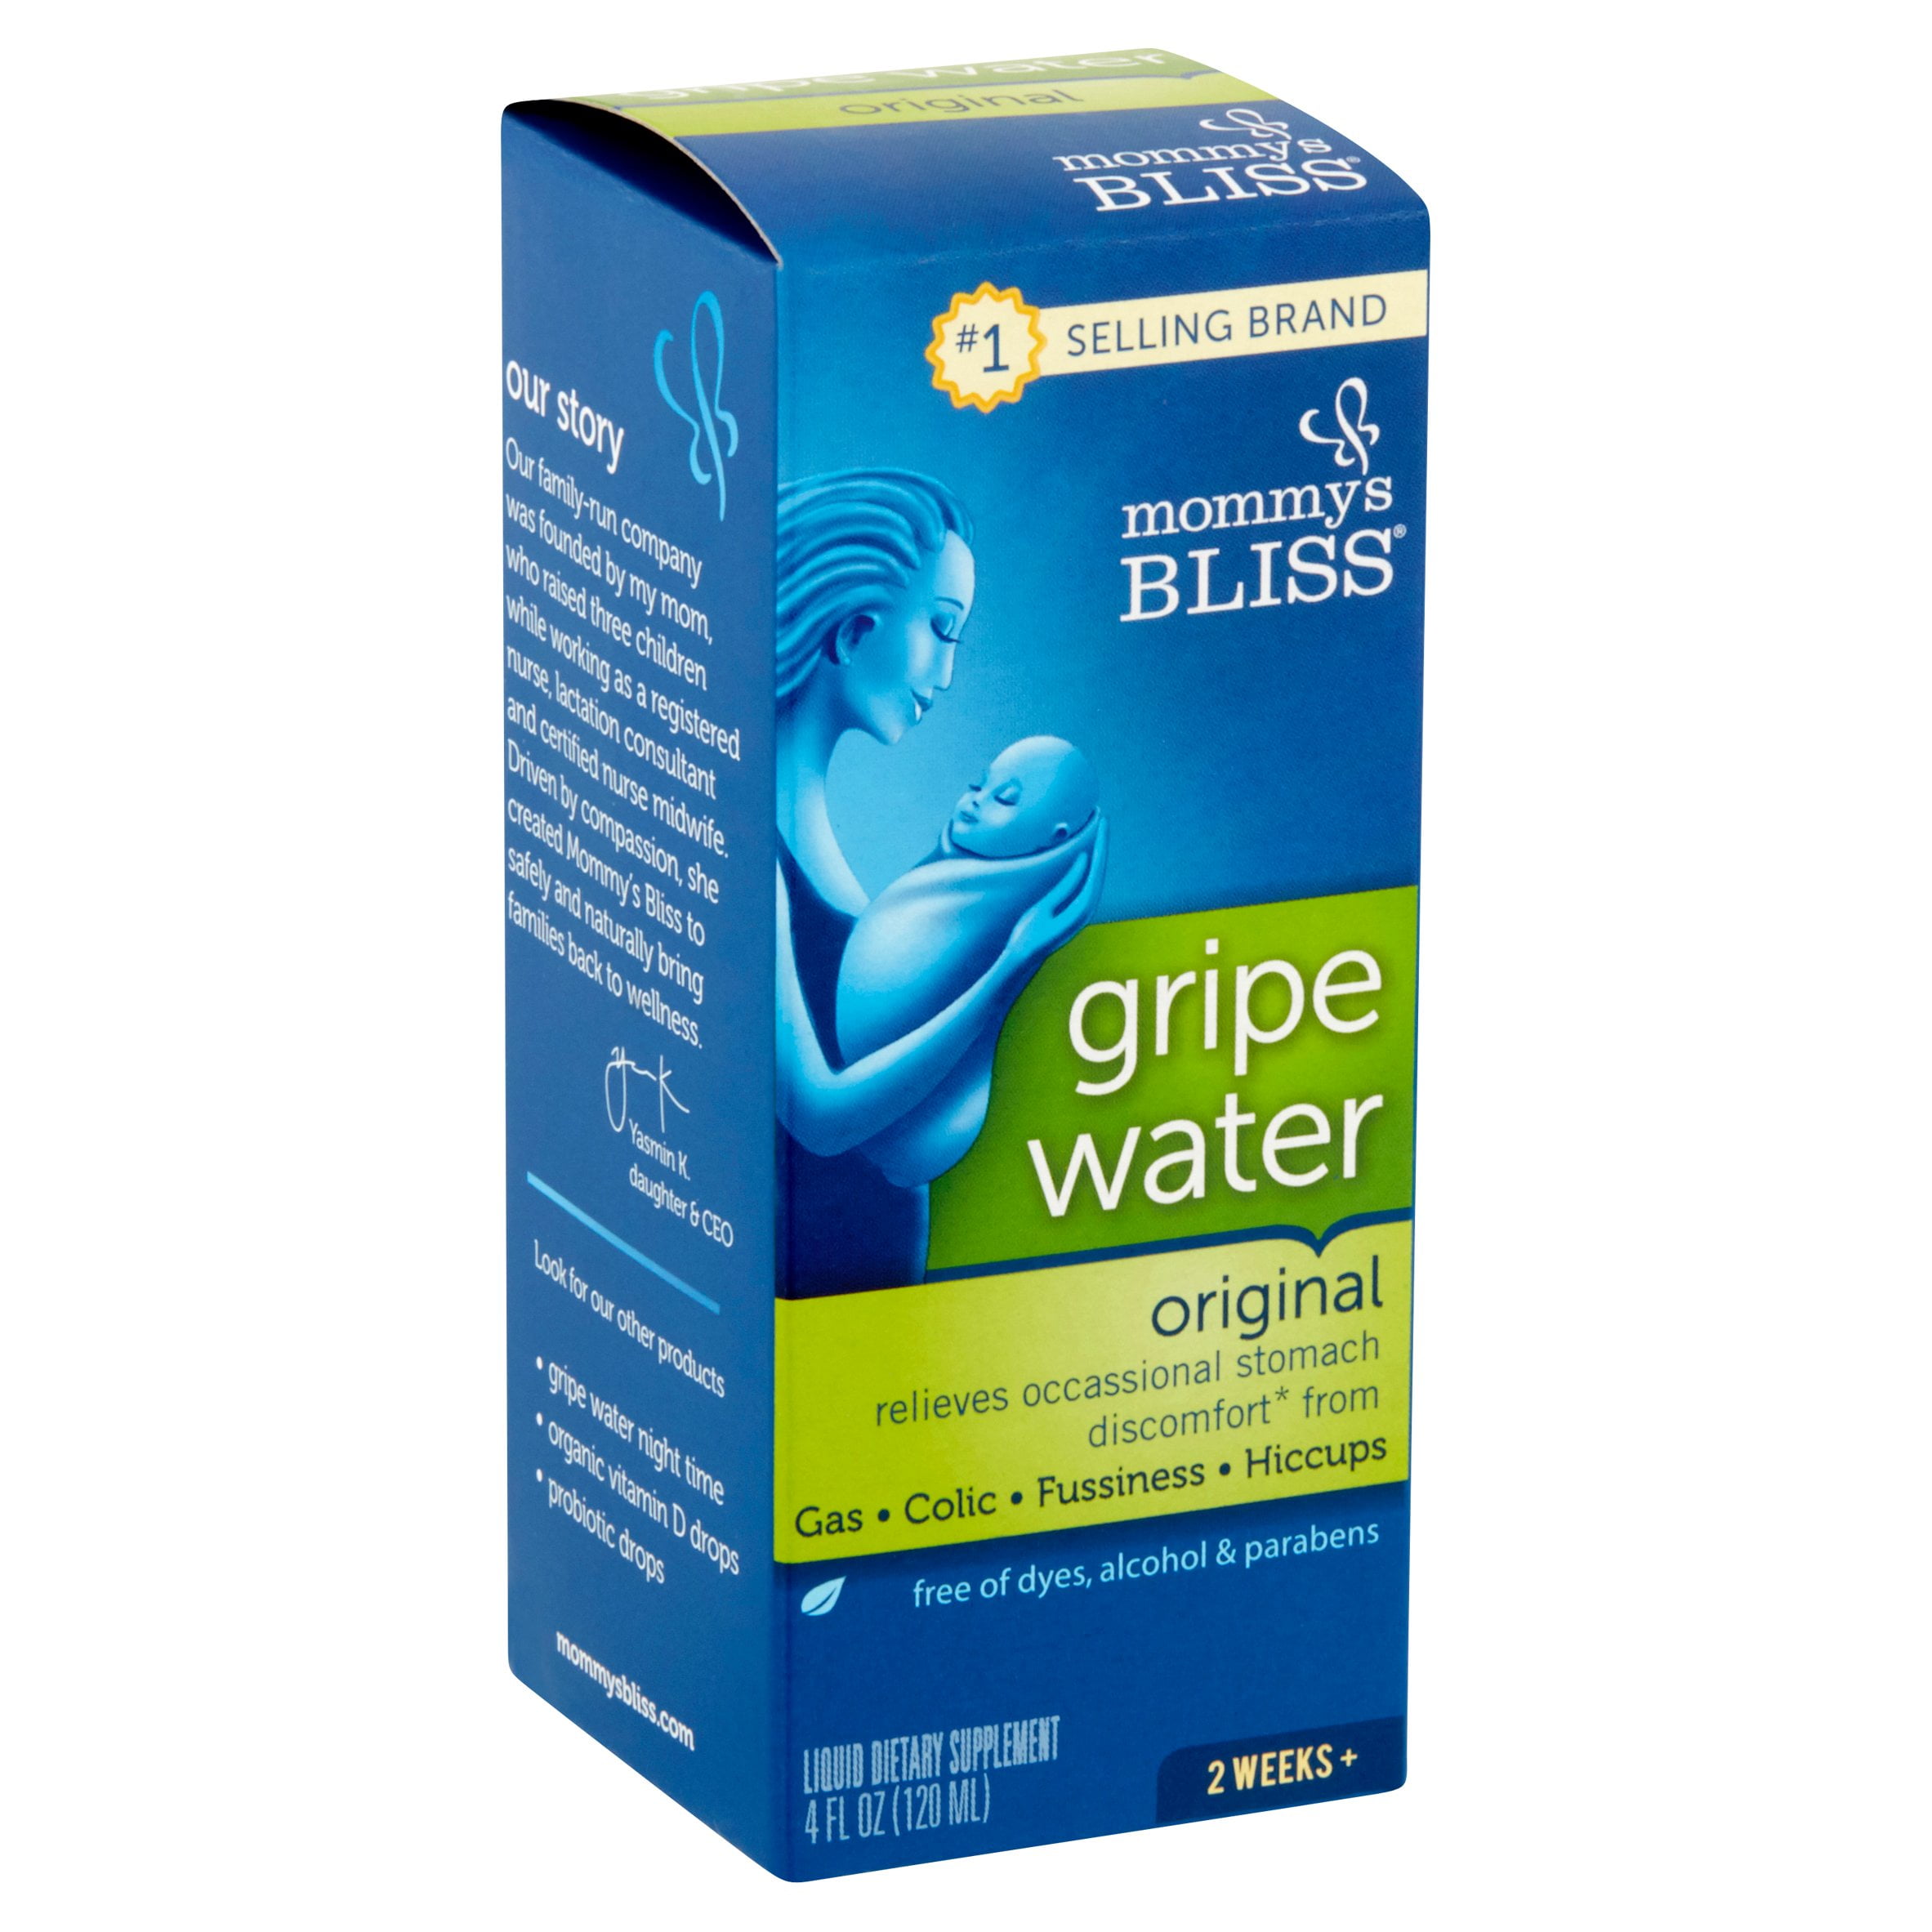 gripe water company